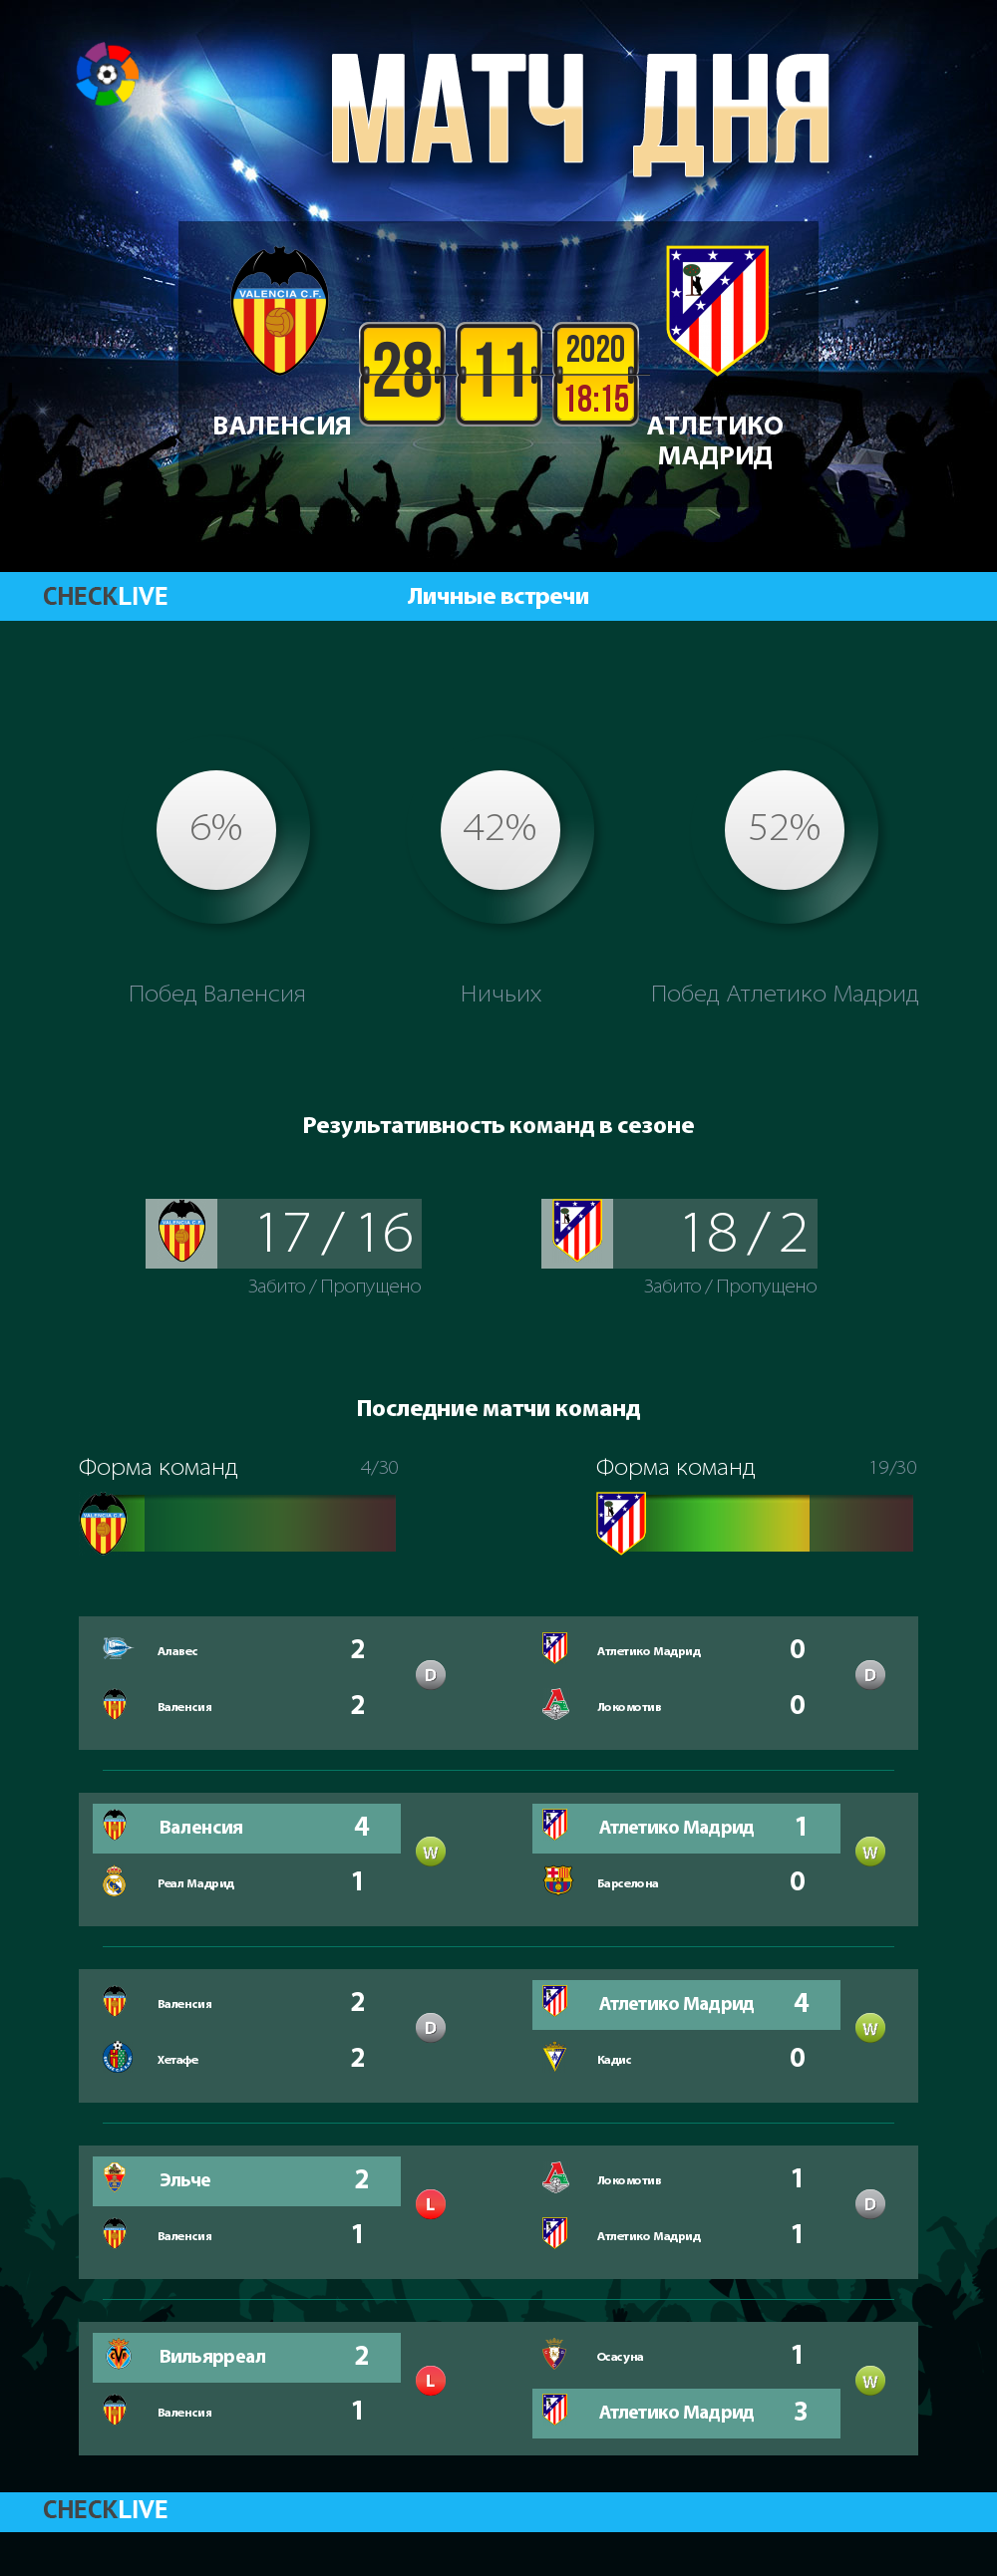 Инфографика Валенсия и Атлетико Мадрид матч дня 28.11.2020